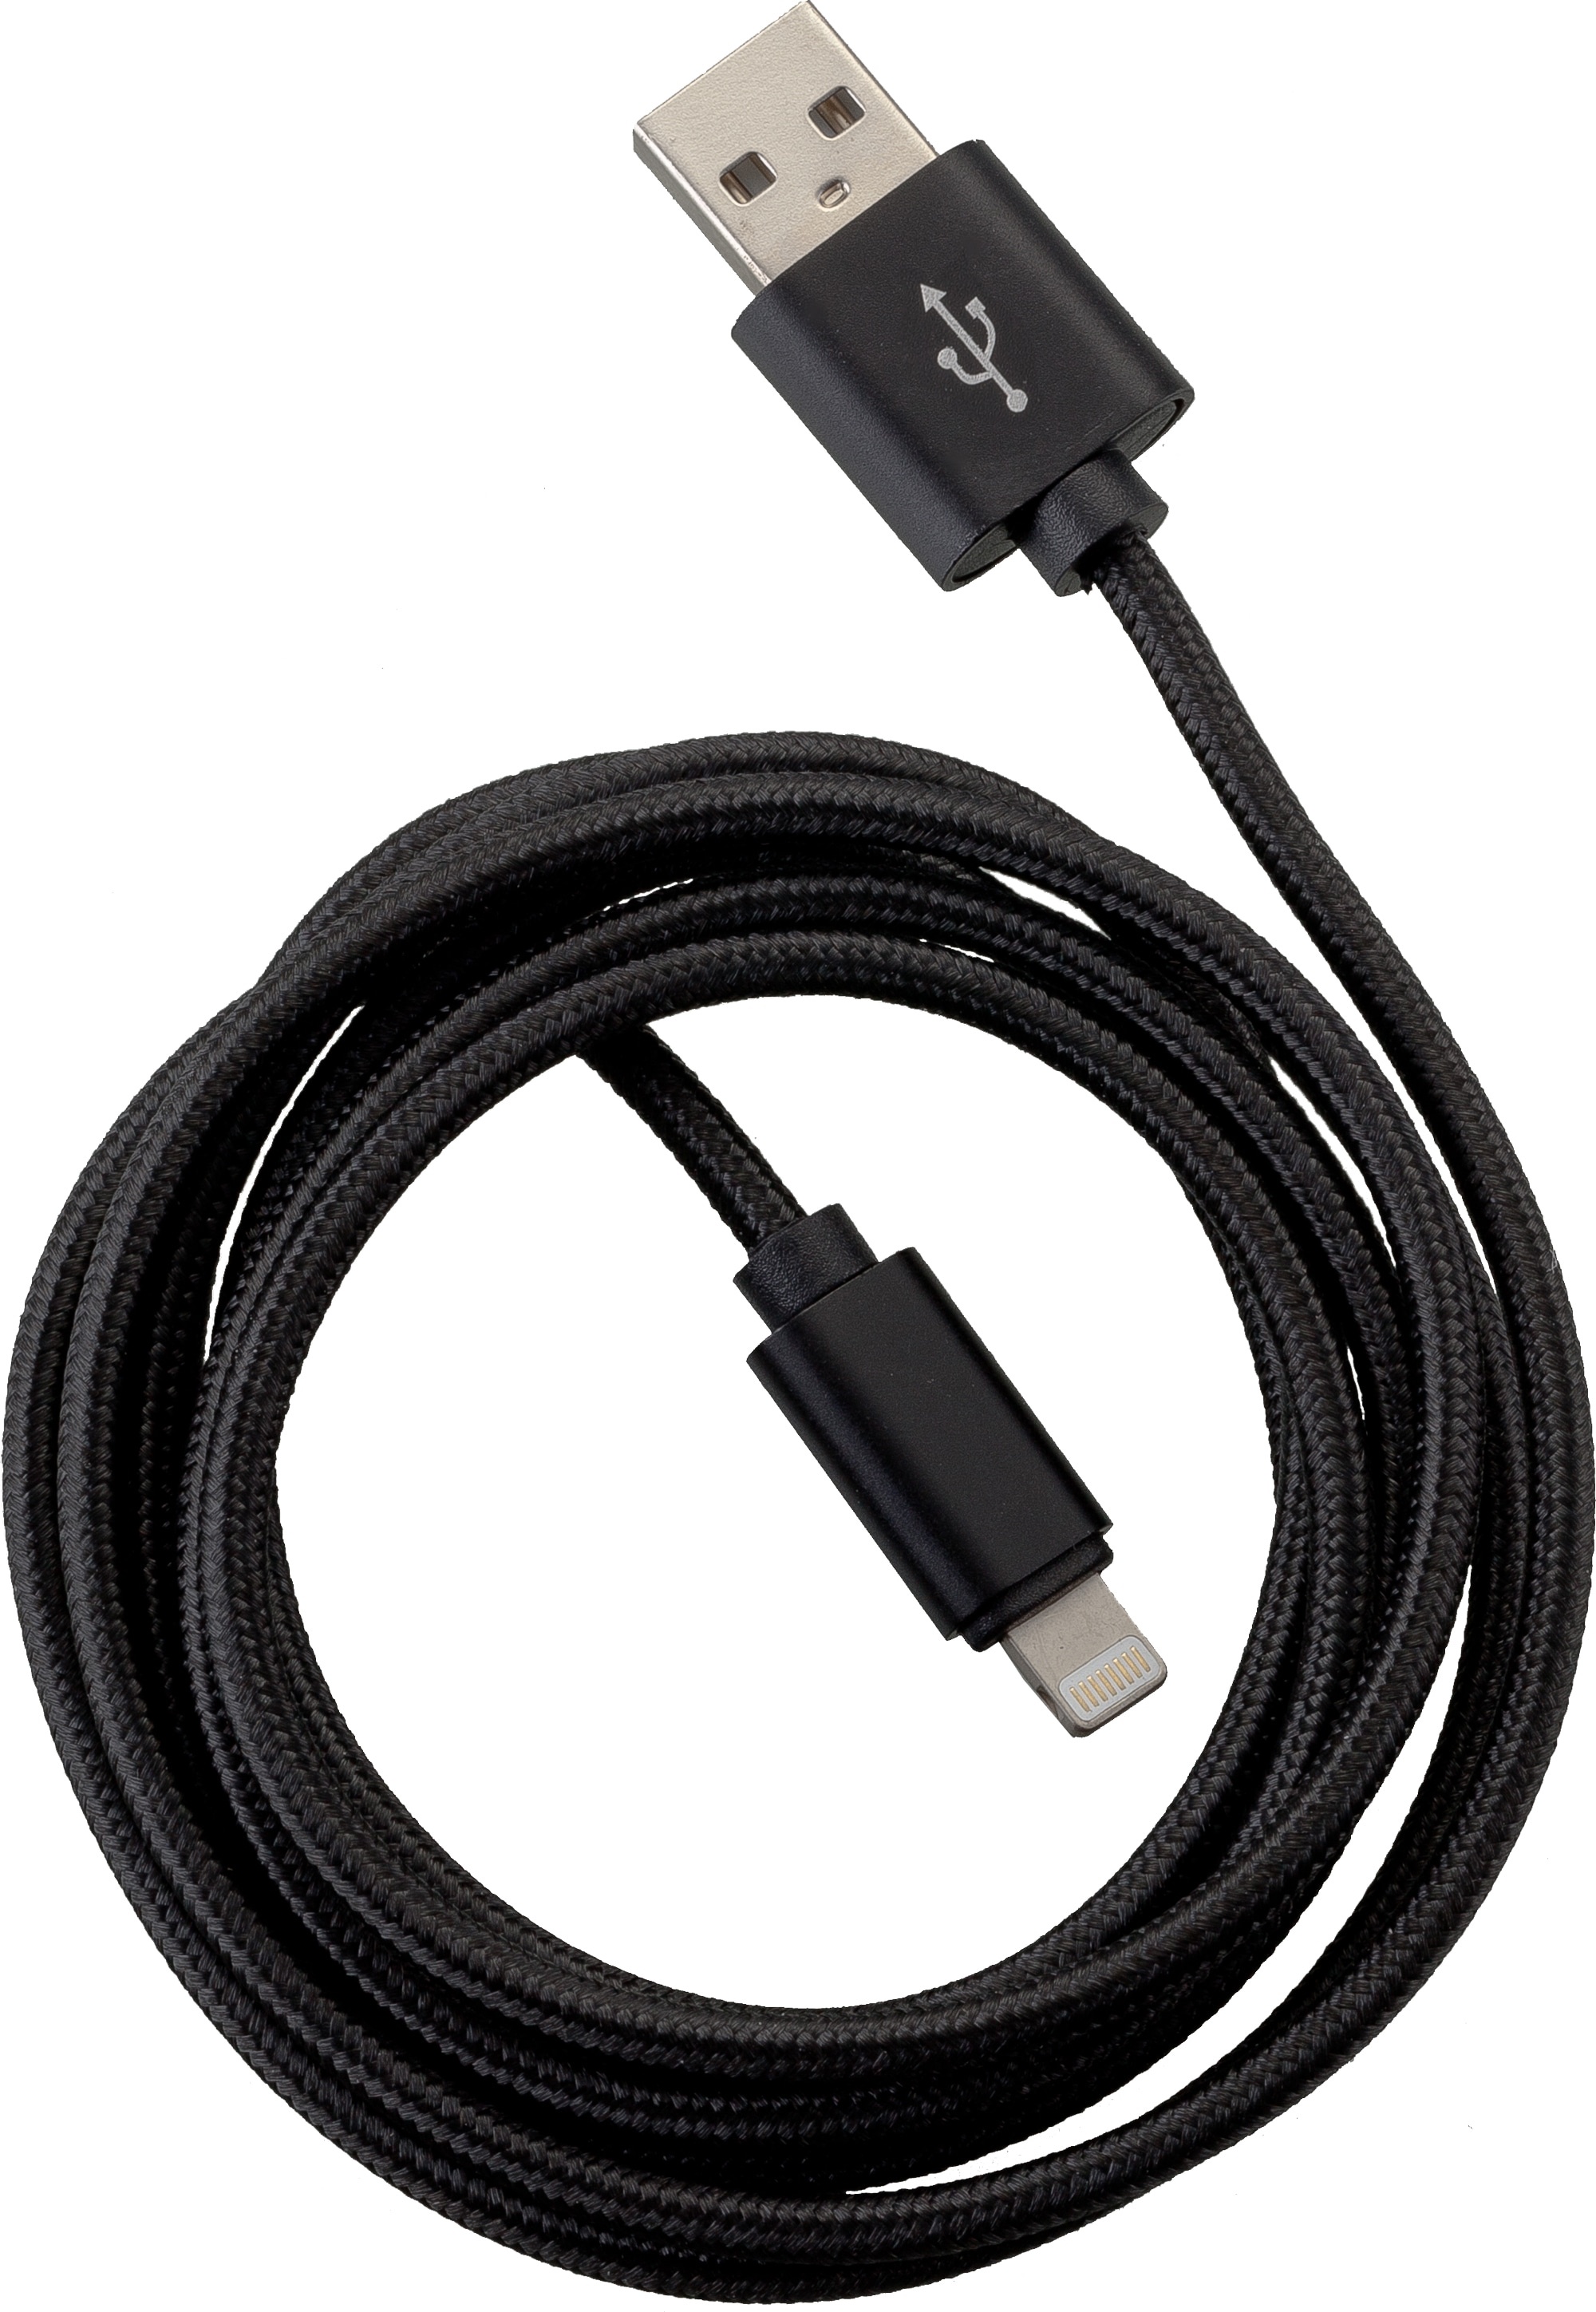 Peter Jäckel FASHION 1,5m USB Data Cable Black für Apple Lightning mit Sync- und Ladefunktion (1.50 m, USB 2.0), USB Kabel